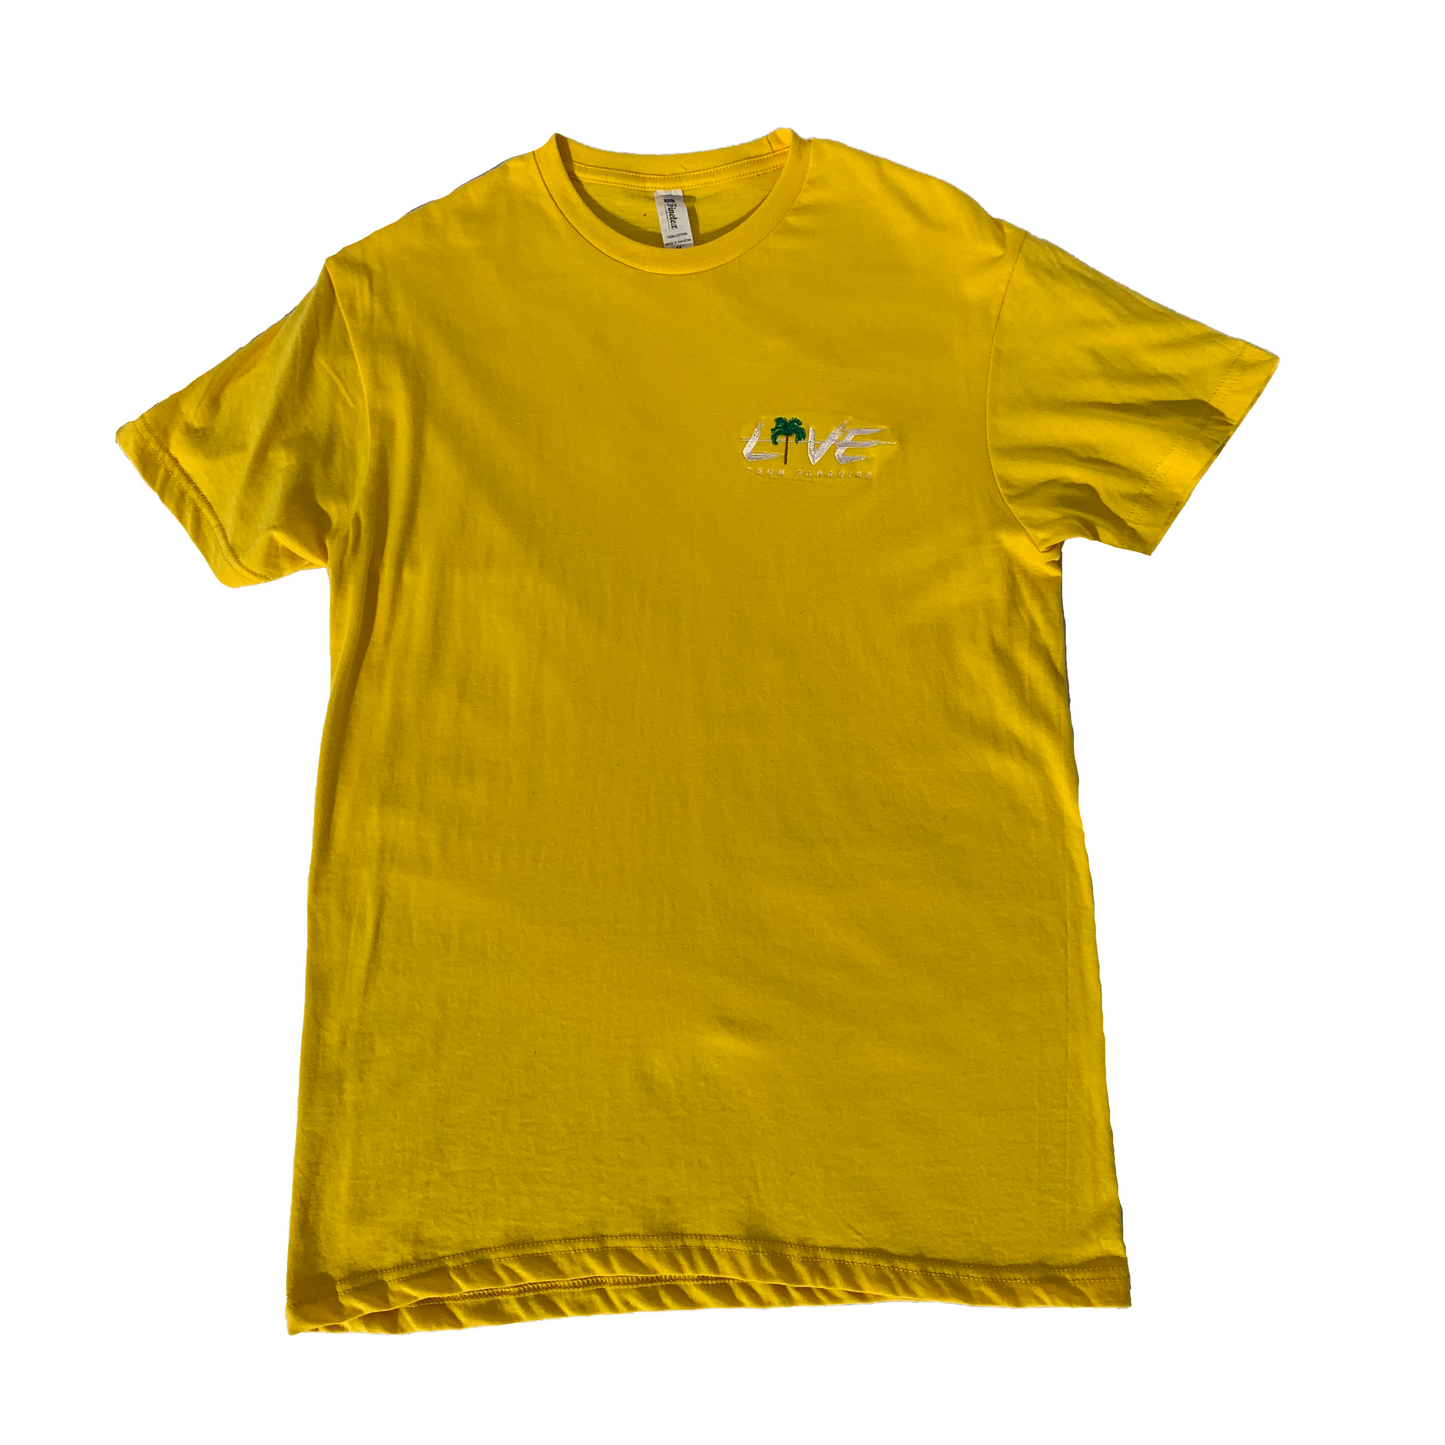 "Canary" T-shirt